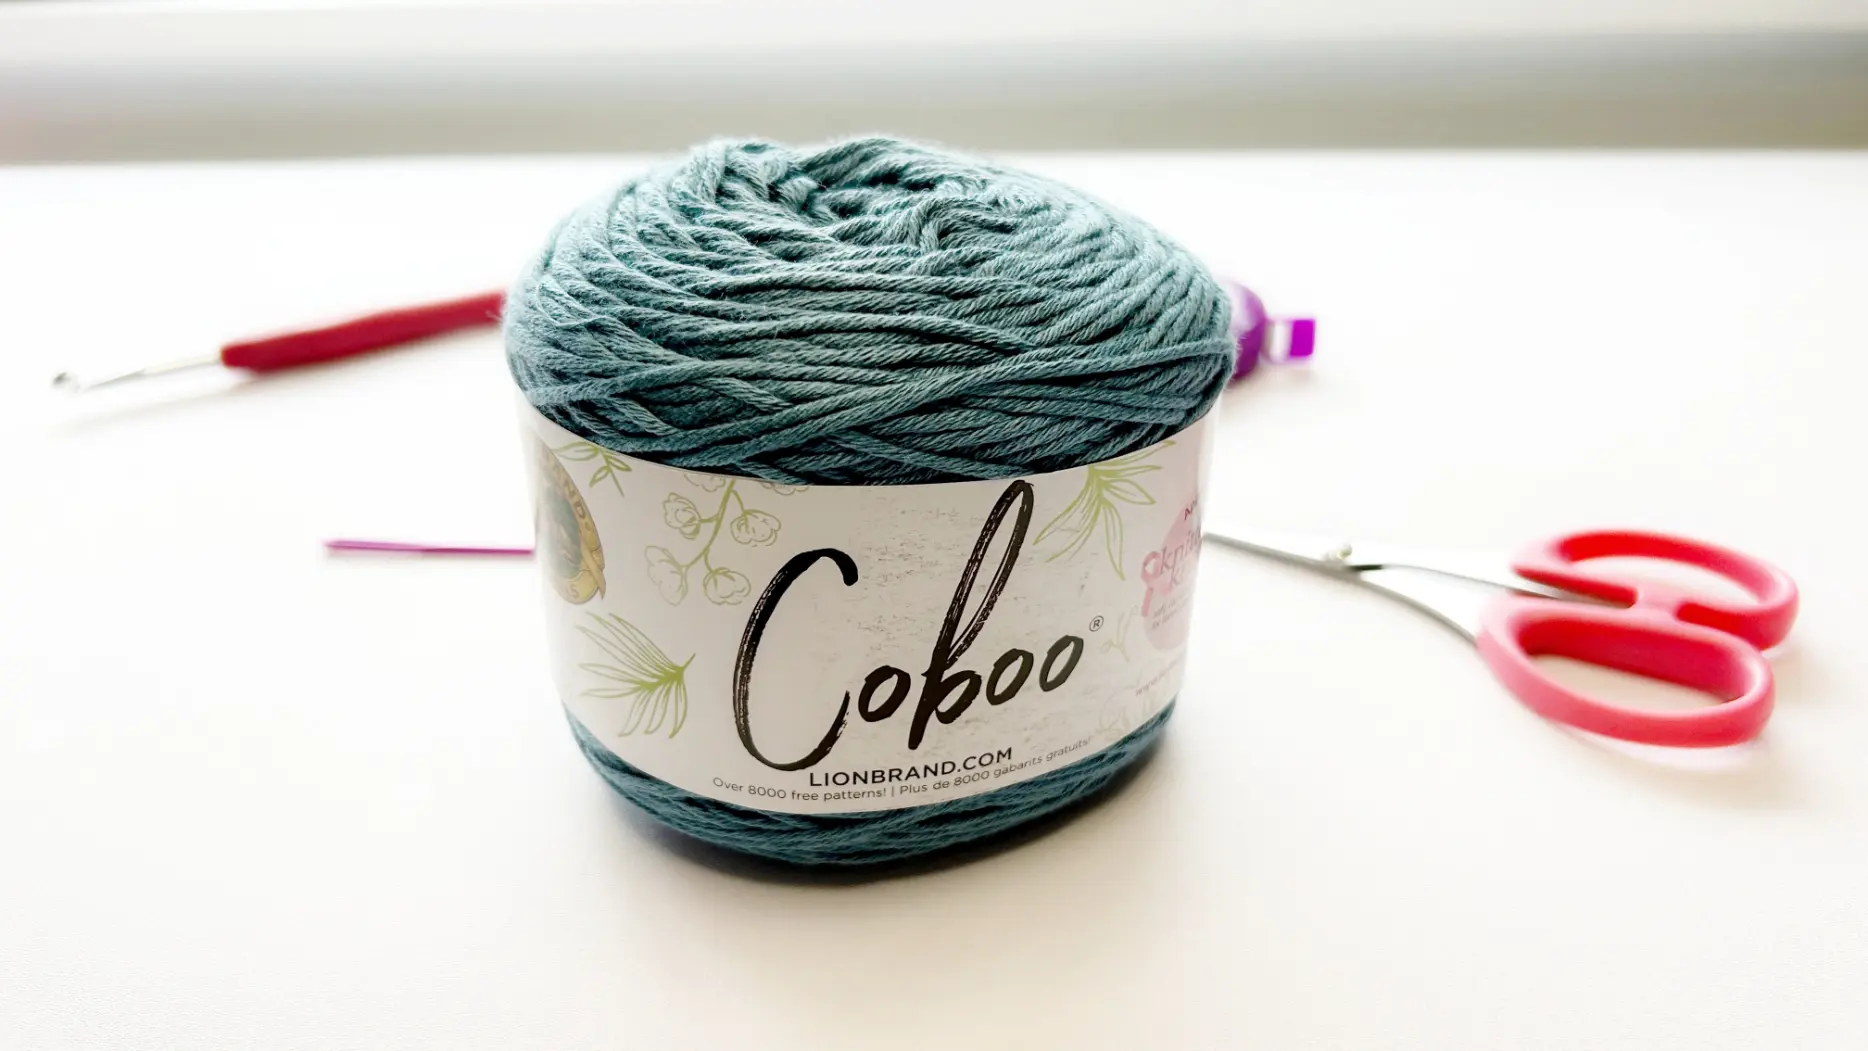 coboo lion brand yarn